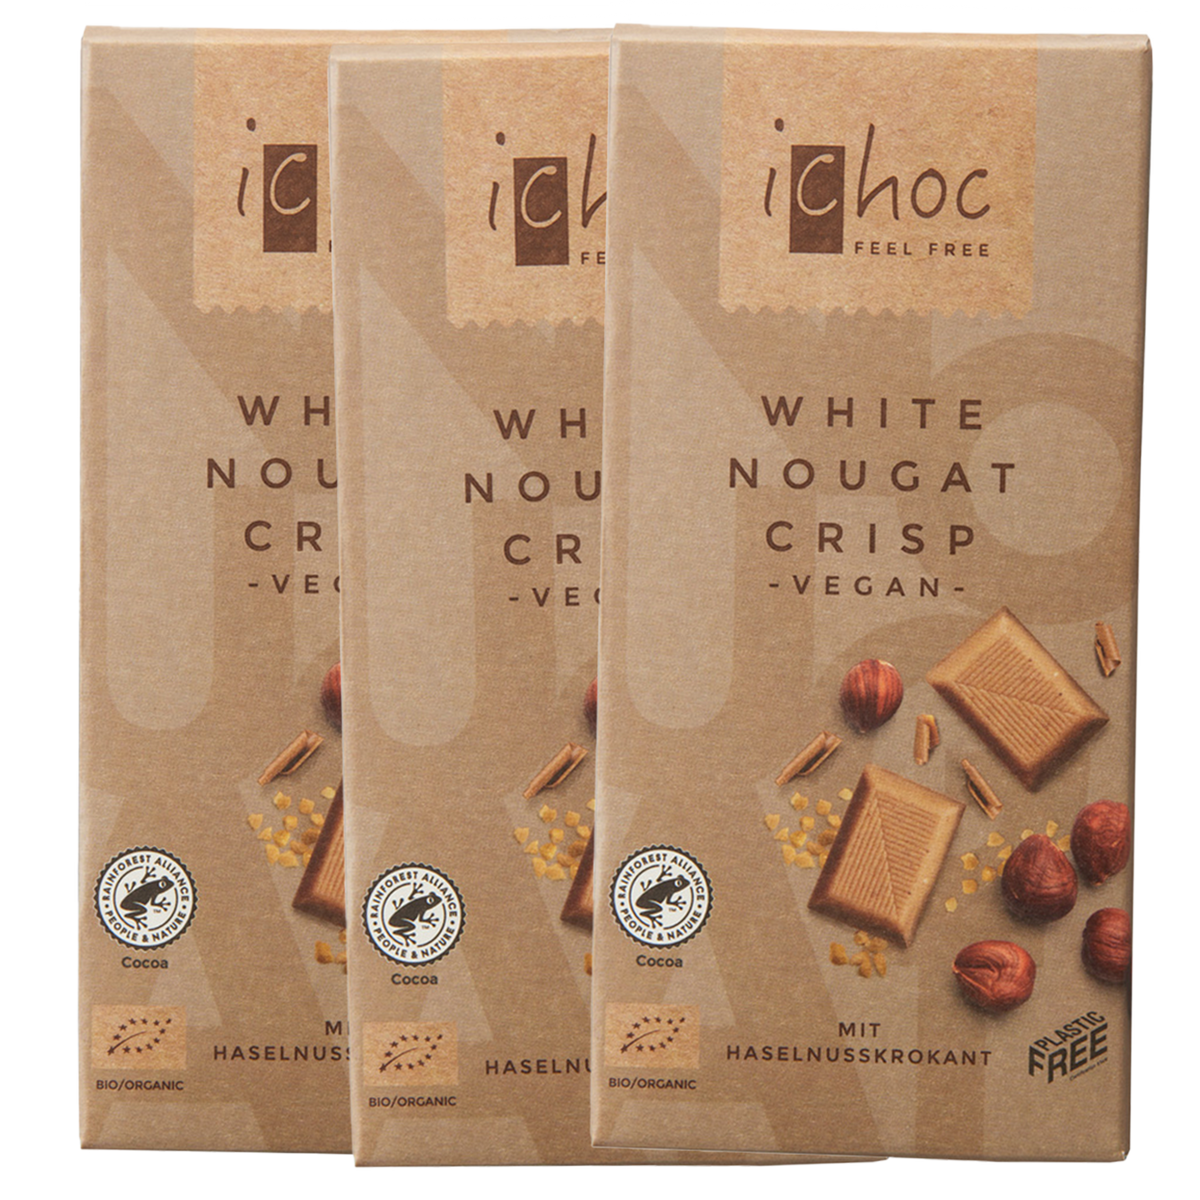 Certified Organic Dairy-Free Chocolate from Germany - White Nougat Crisp (3pc) - Horizon Farms